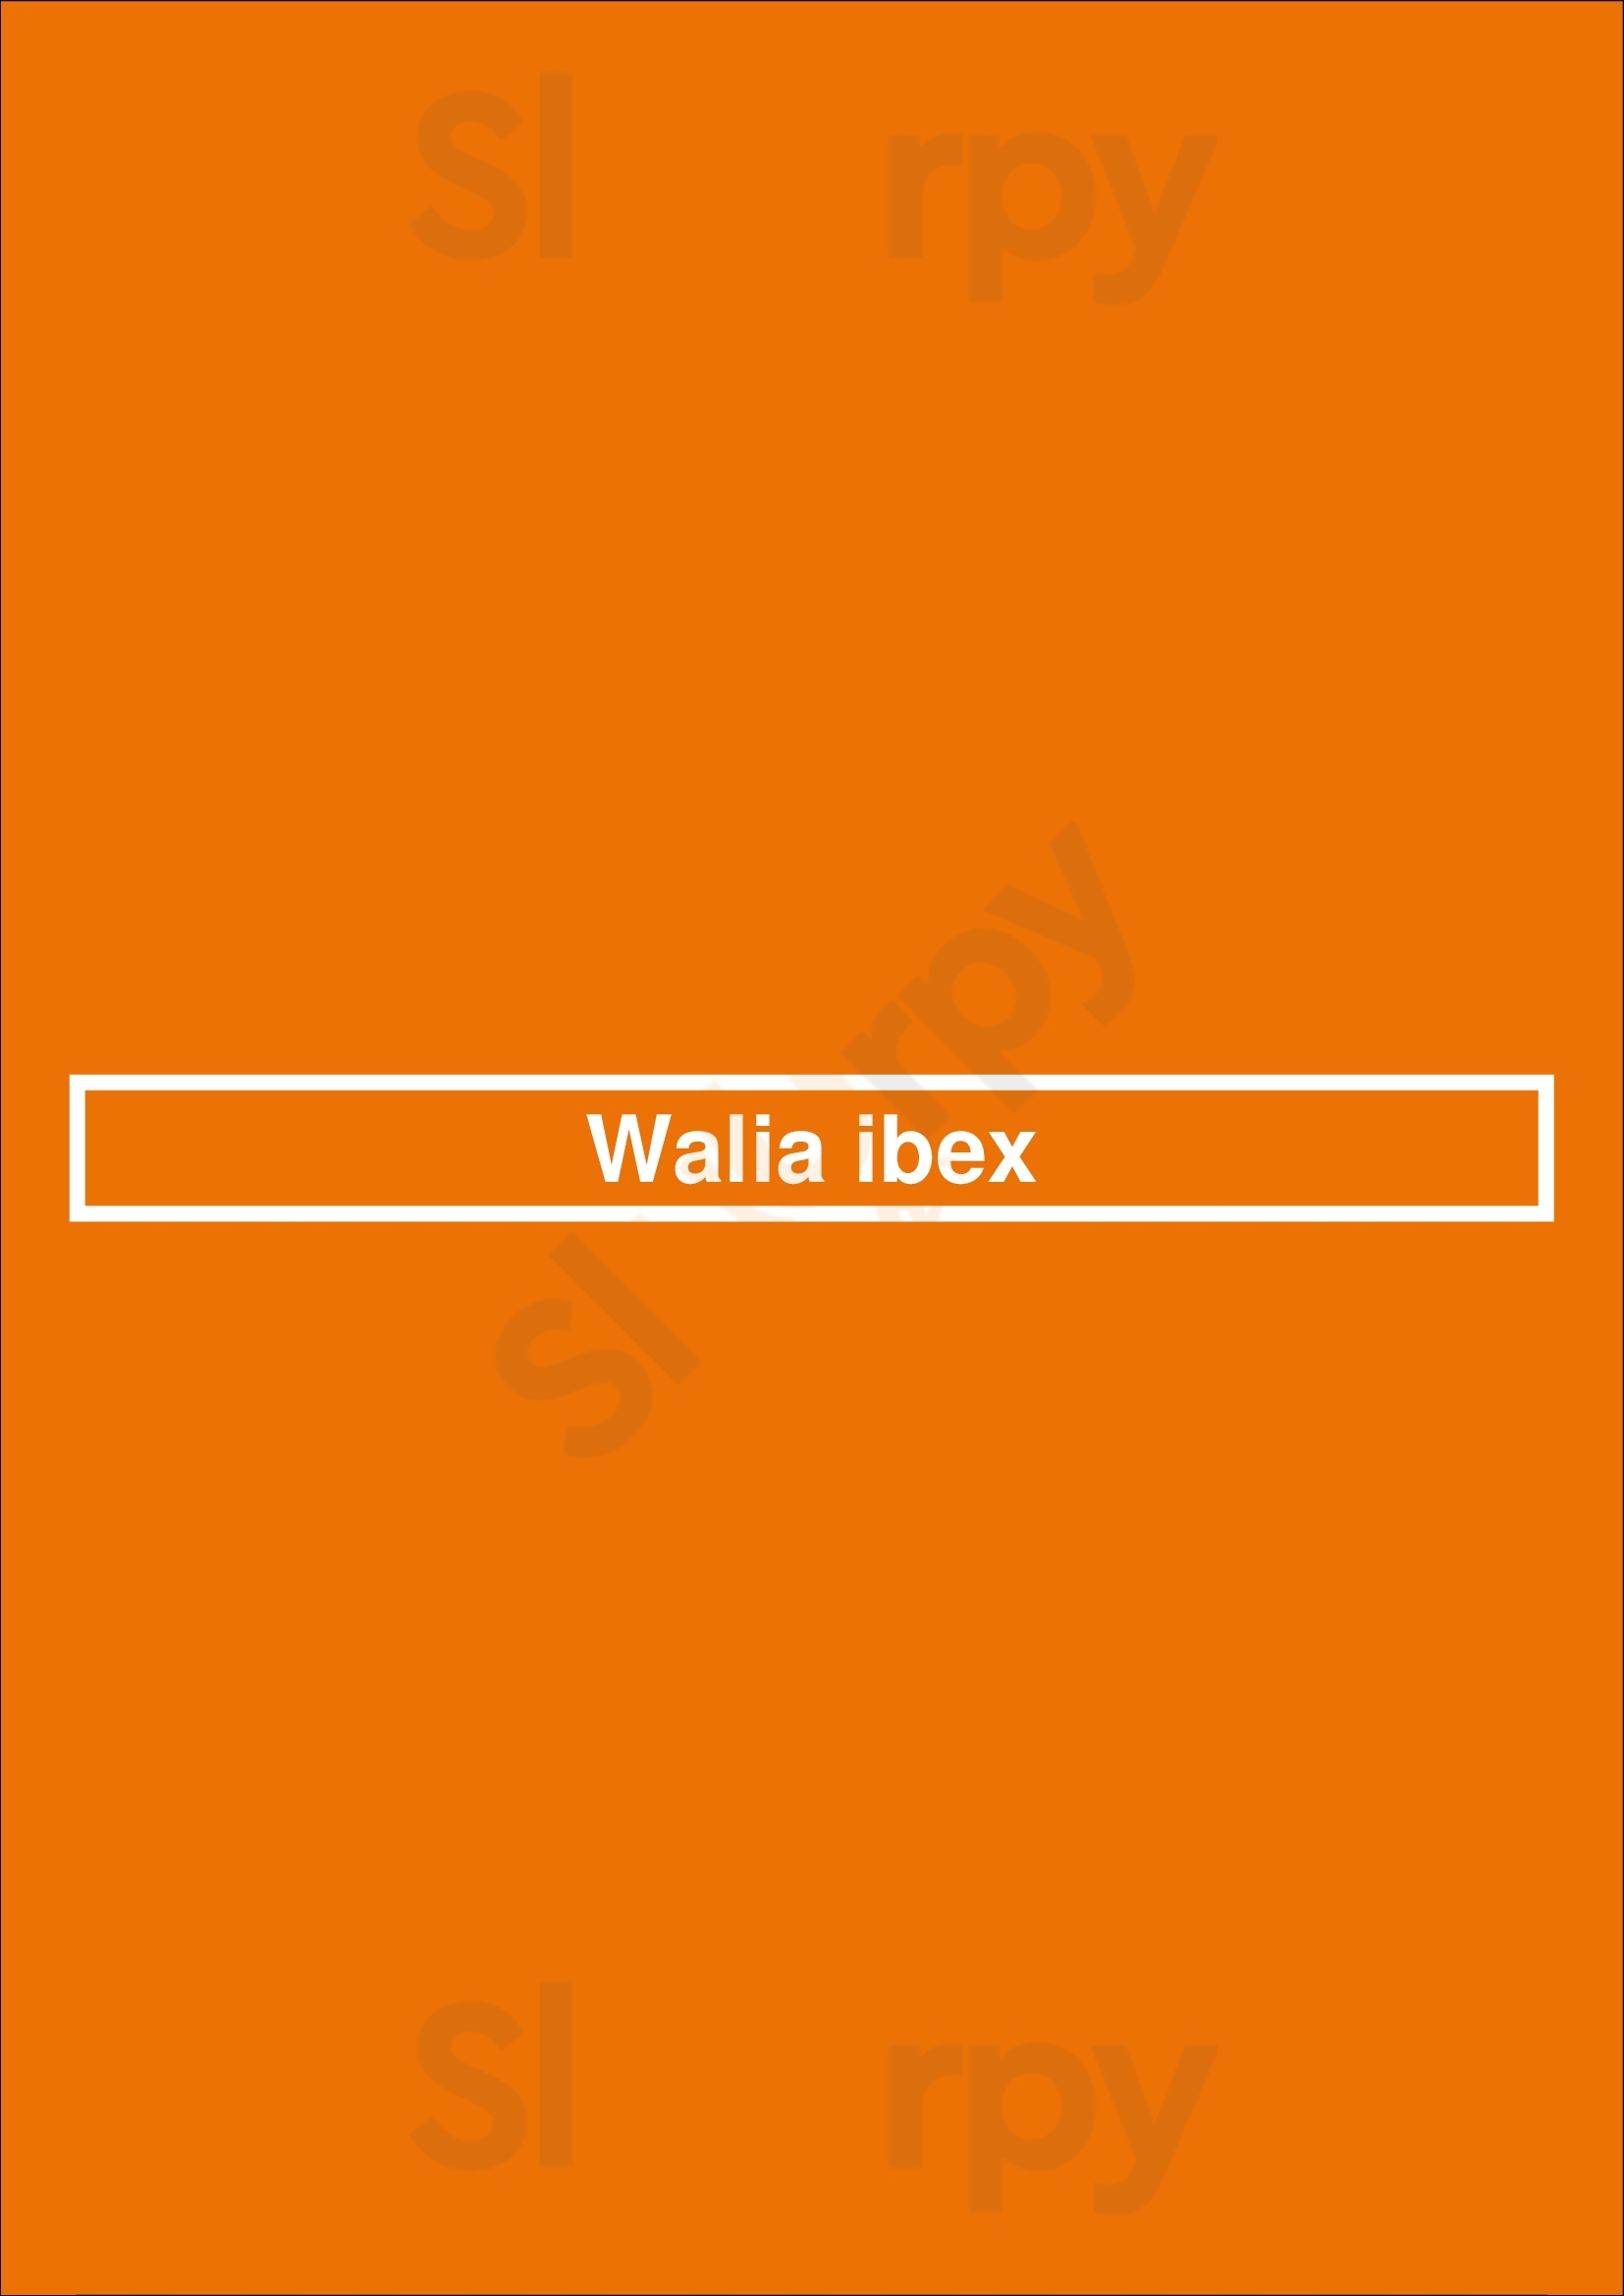 Walia Ibex Amsterdam Menu - 1